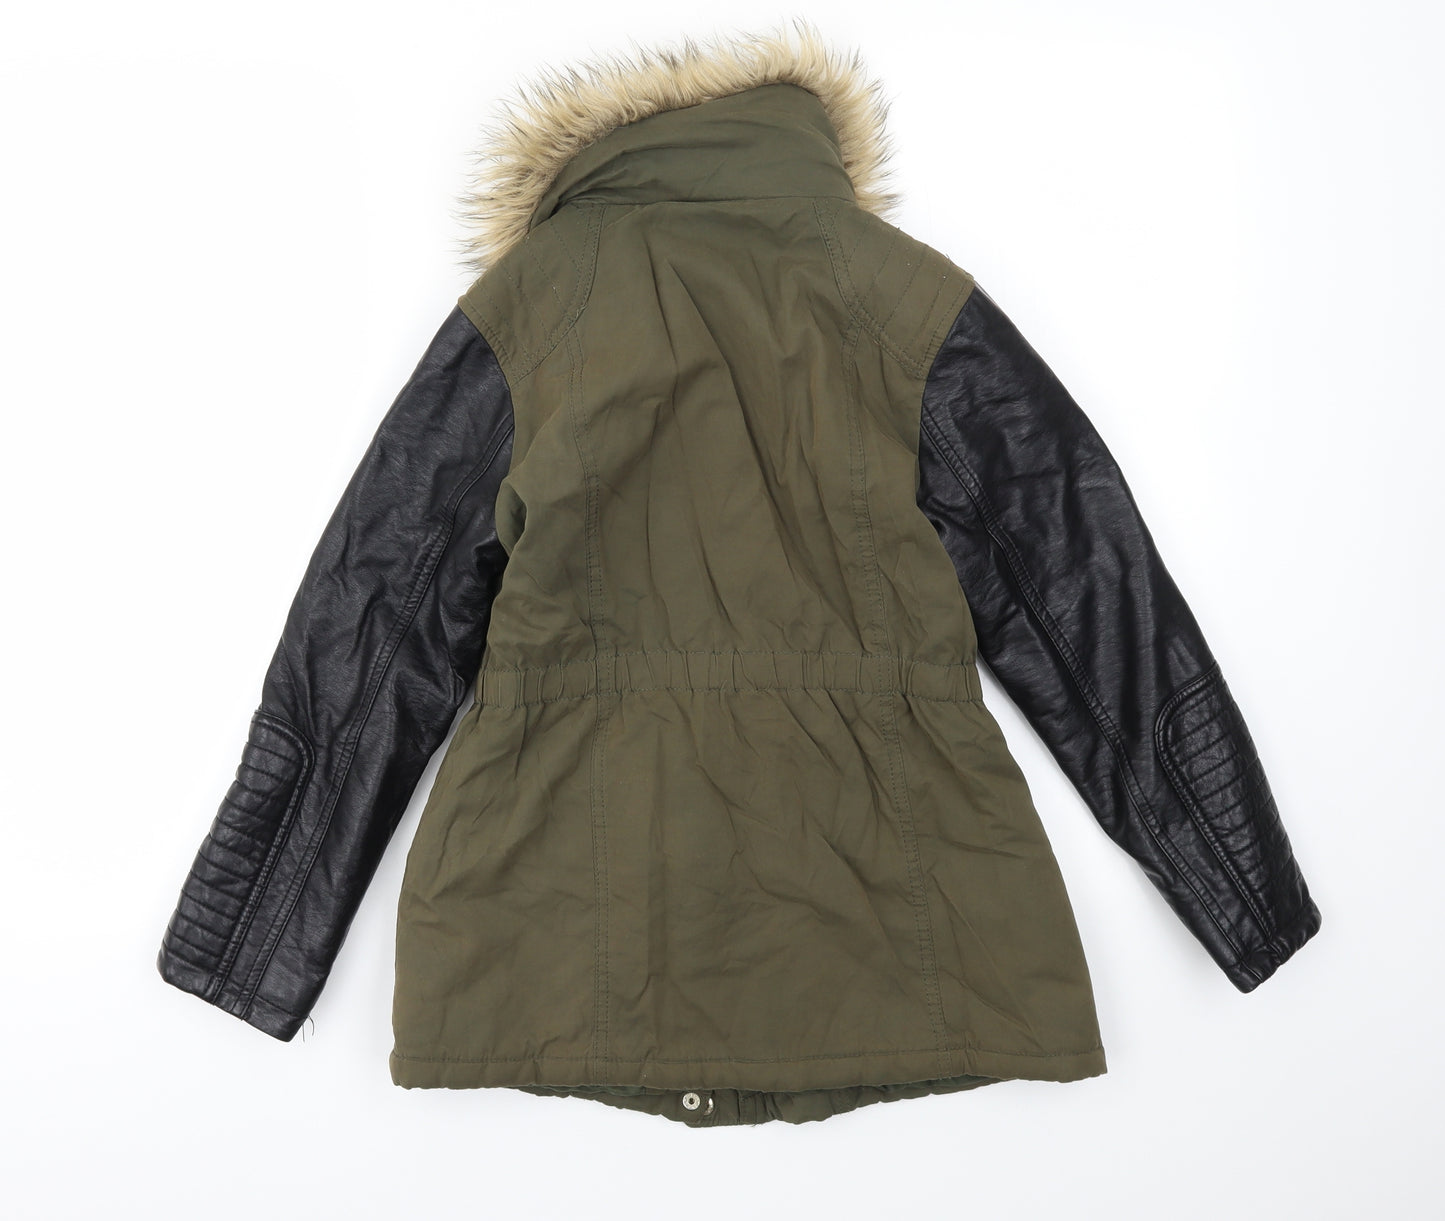 YD Girls Green   Basic Coat Coat Size 9-10 Years